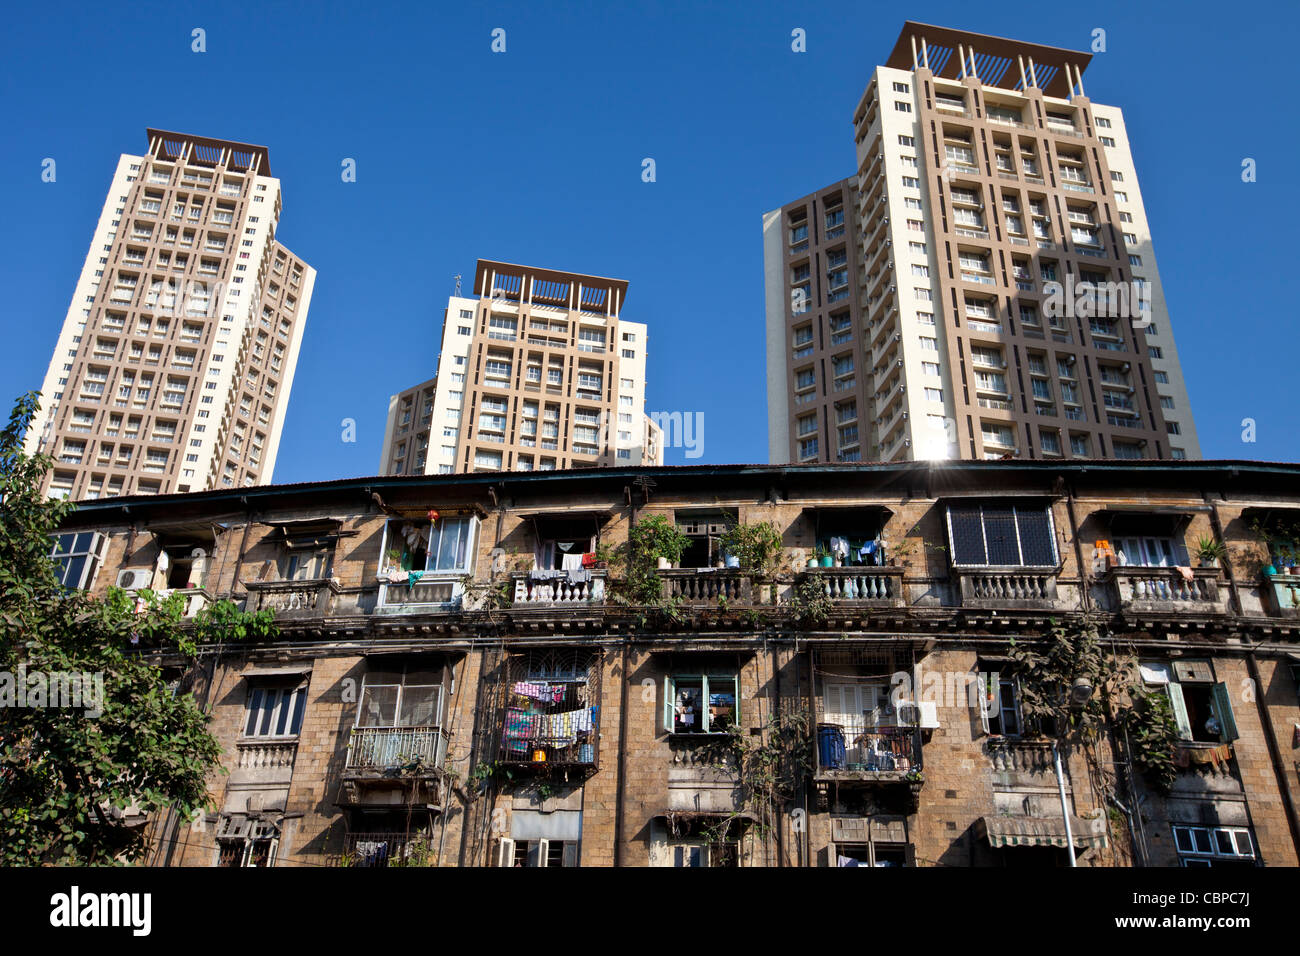 Old traditional tenement housing in shadow of new modern high rise apartment blocks at Mahalaxmi in Mumbai, India Stock Photo